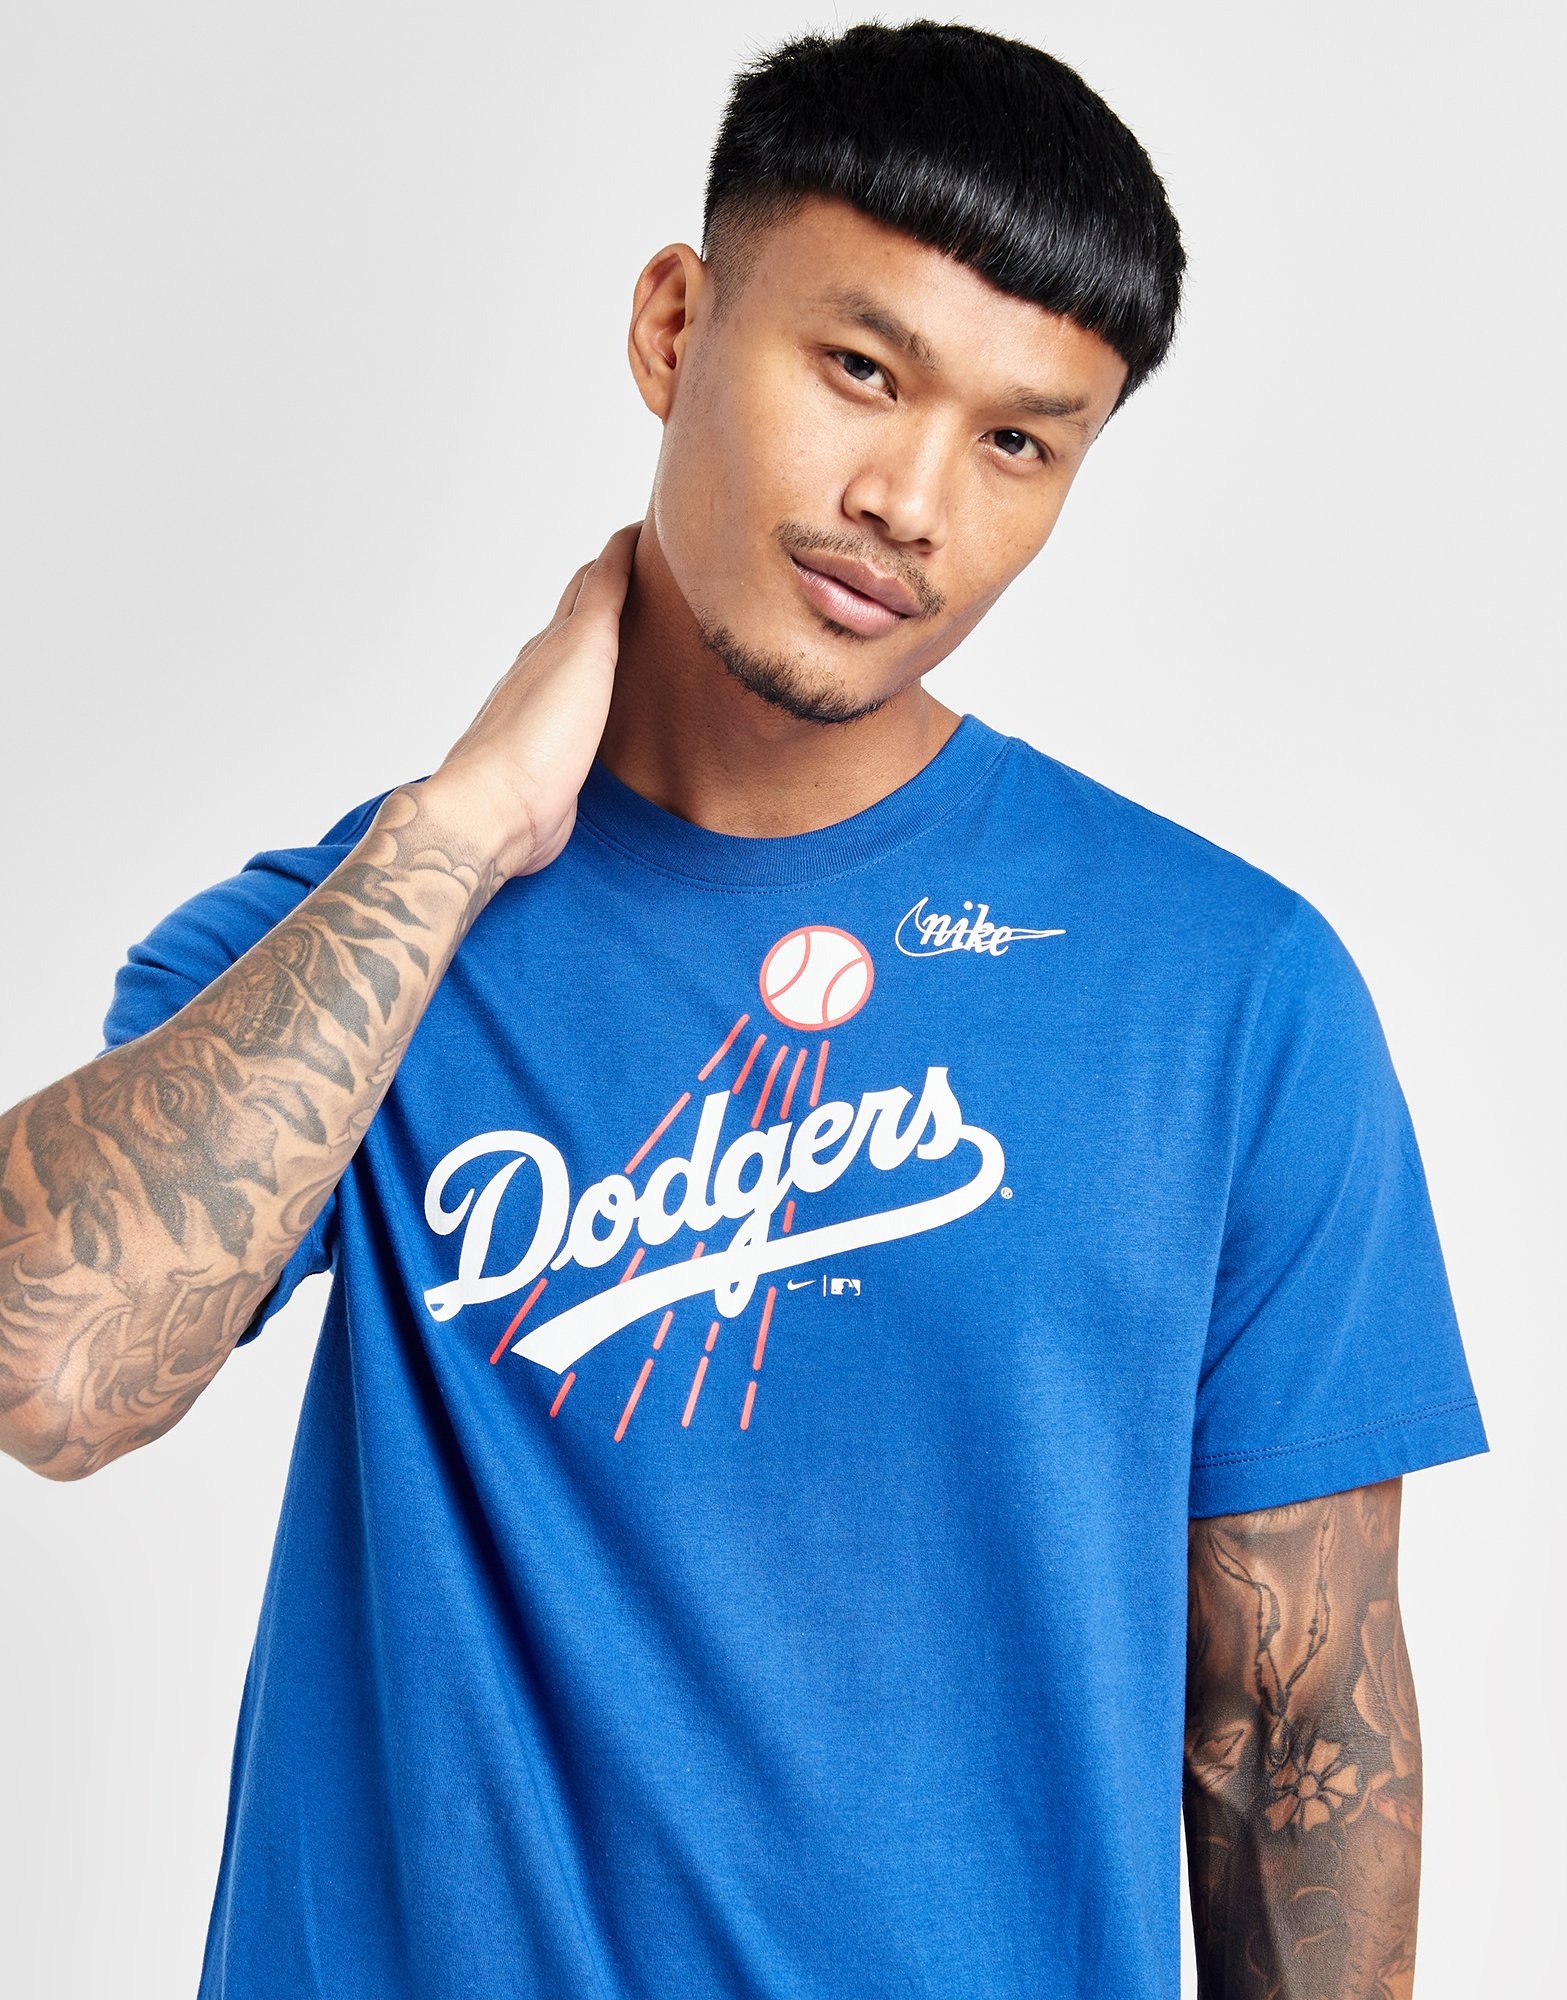 Nike MLB LA Dodgers Wordmark Short Sleeve T-Shirt White